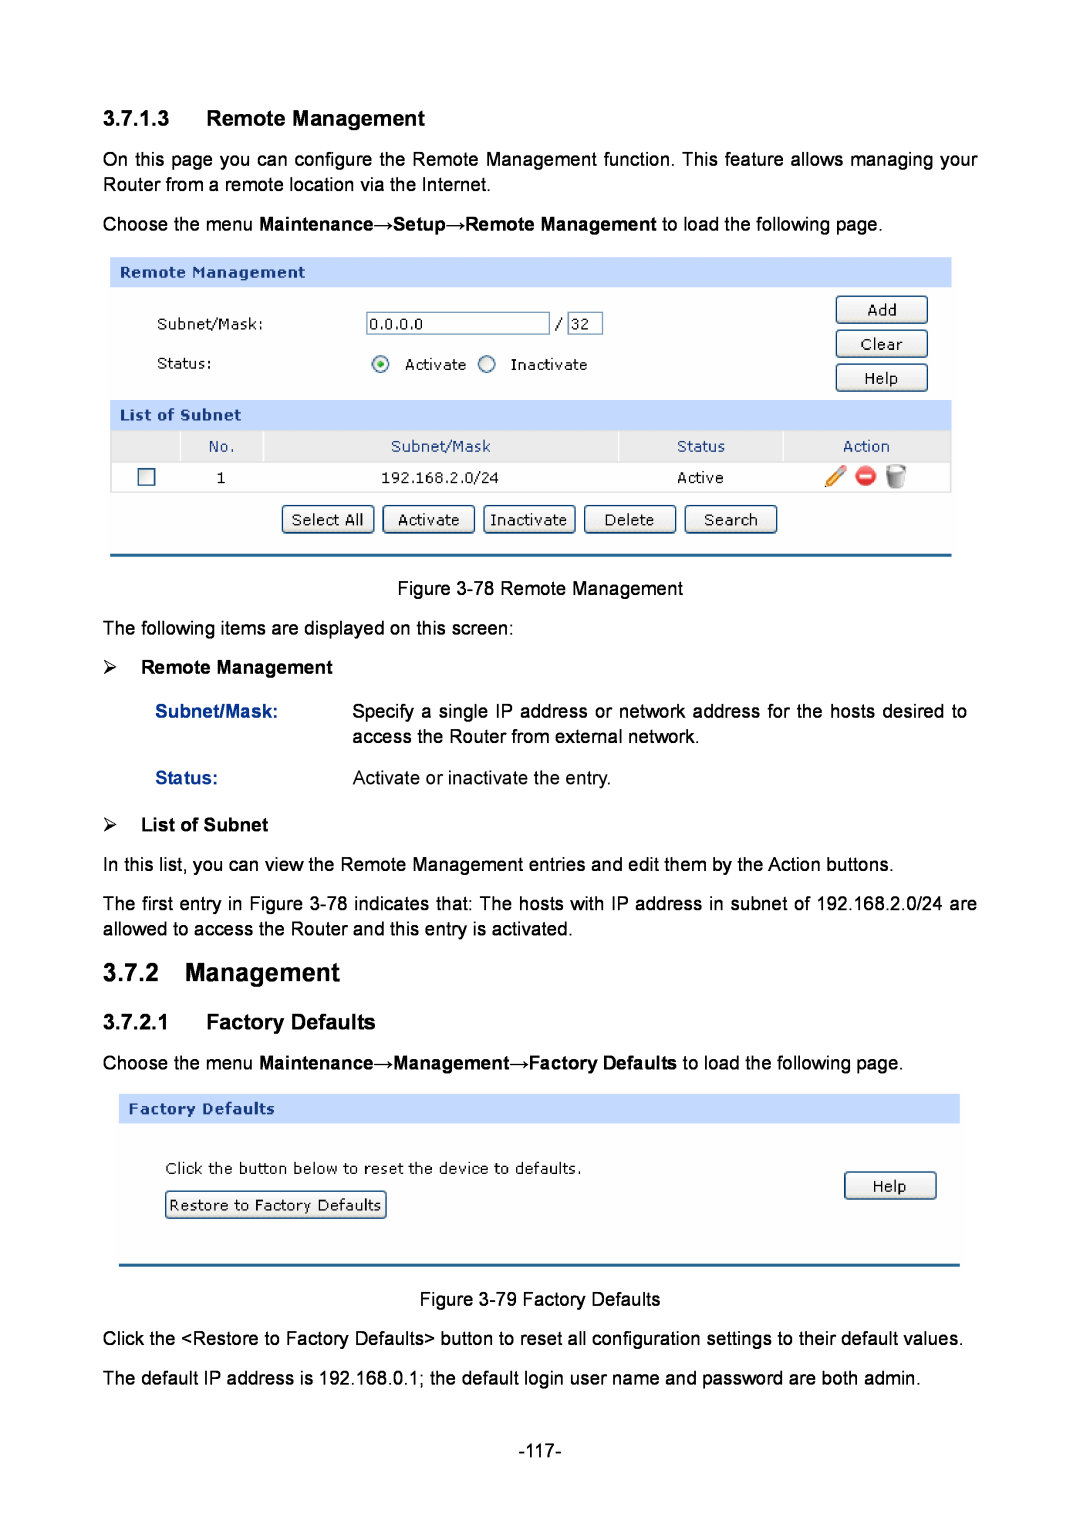 TP-Link TL-ER6120 manual Factory Defaults, ¾ Remote Management, ¾ List of Subnet 